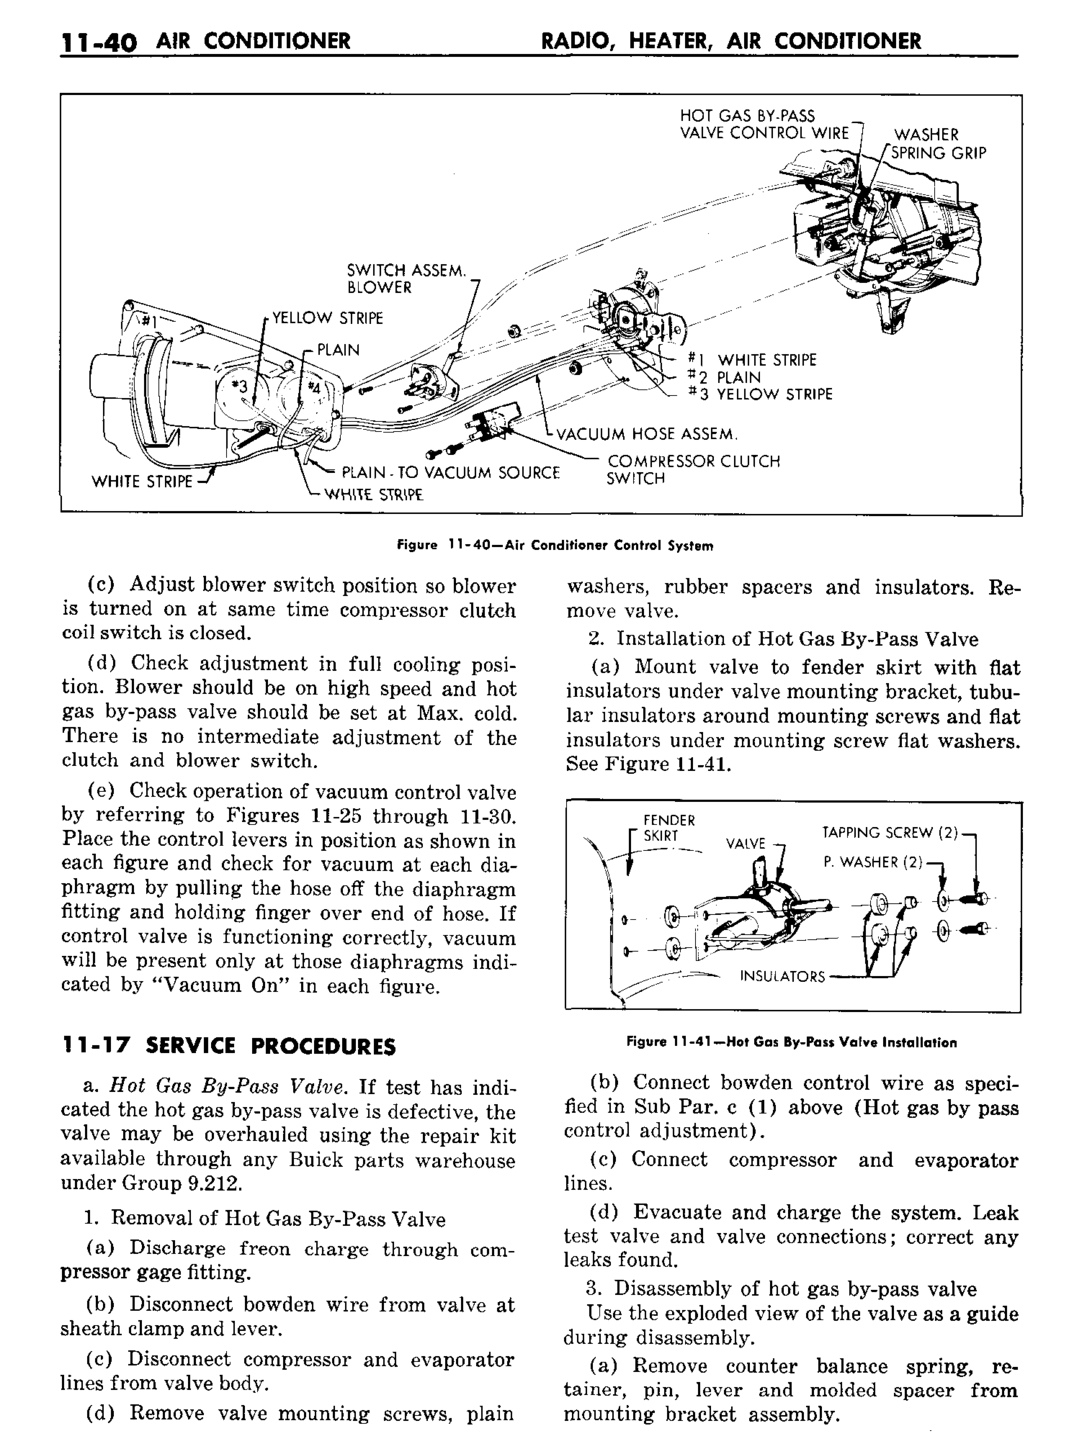 n_12 1959 Buick Shop Manual - Radio-Heater-AC-040-040.jpg